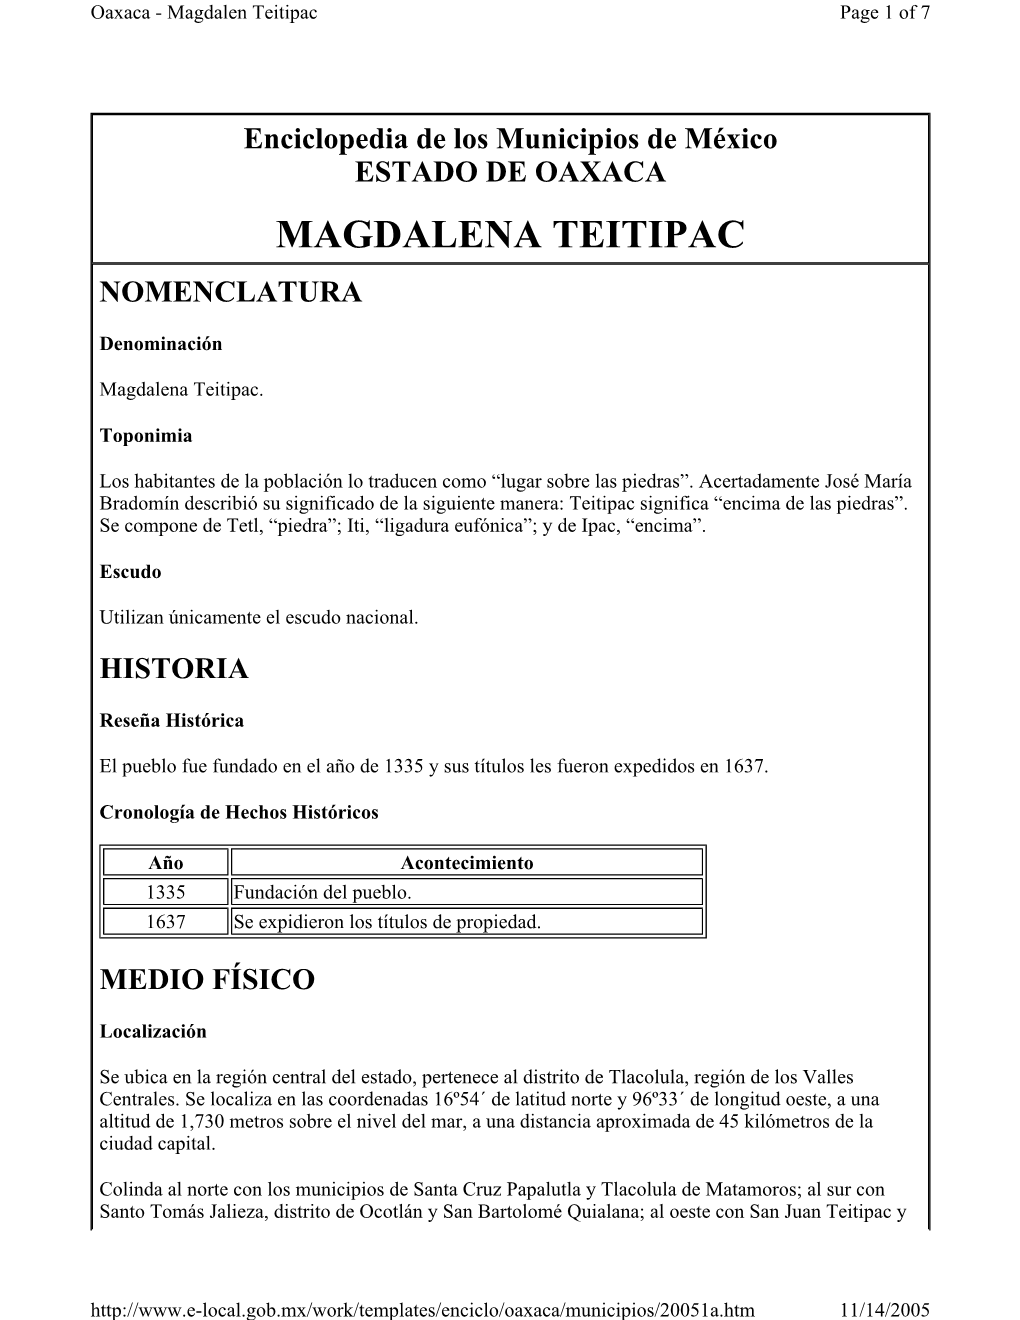 Magdalena Teitipac